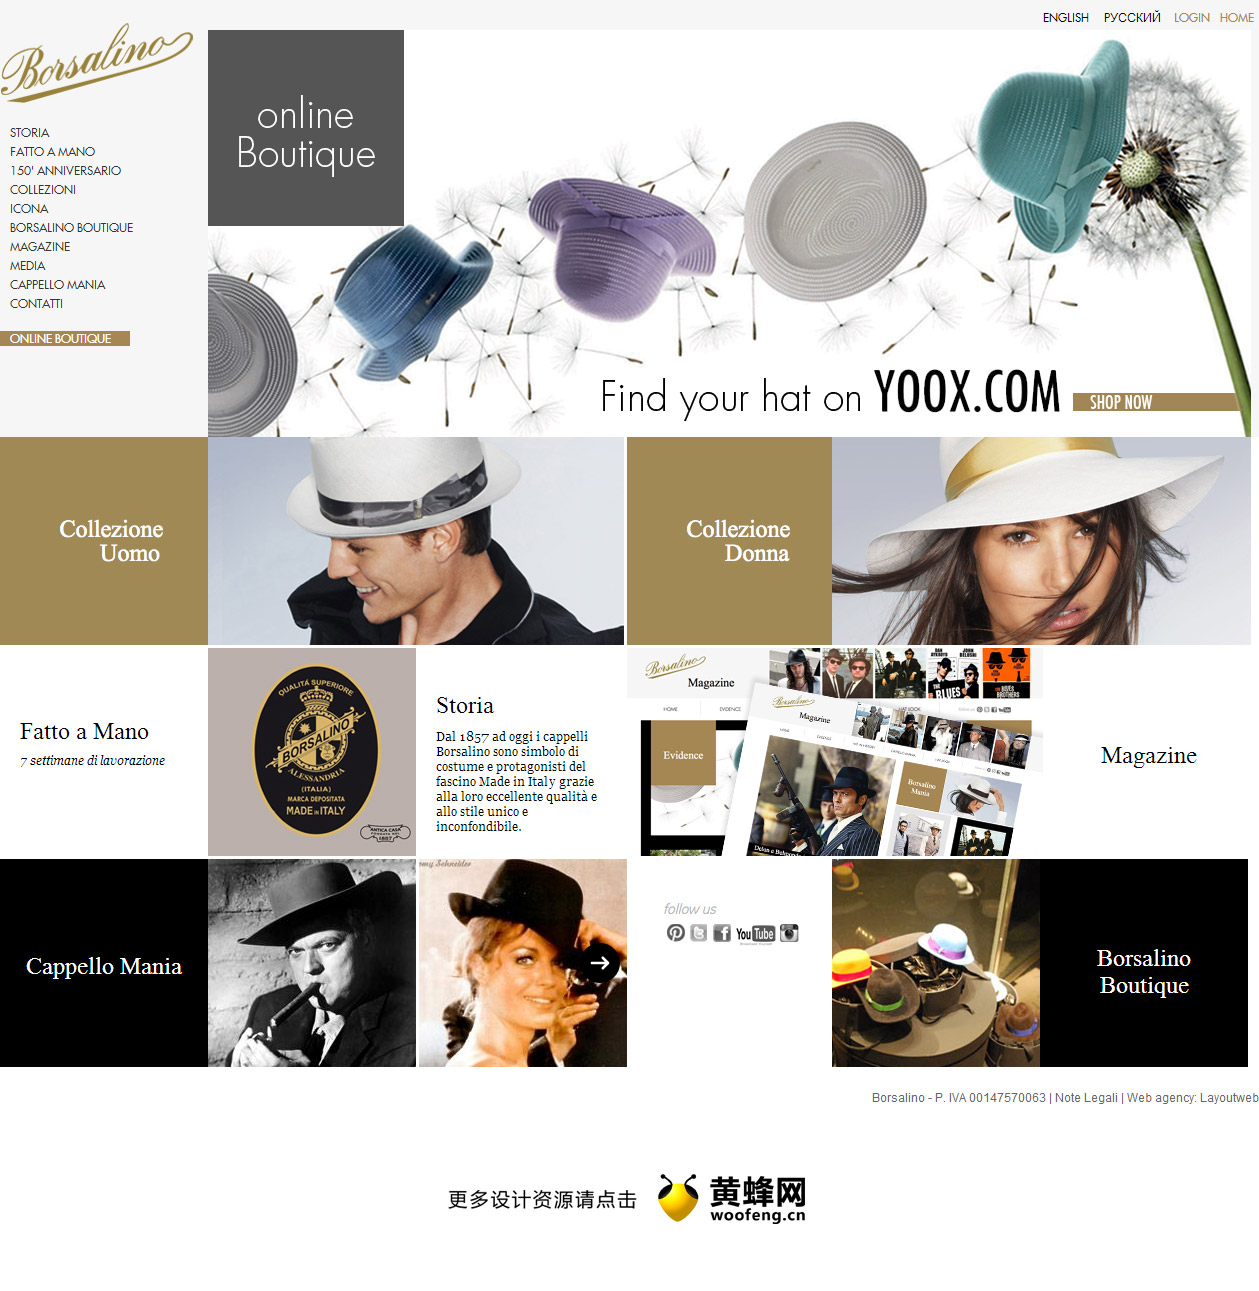 Borsalino官方网站，意大利制造的男人和女人的帽子，来源自黄蜂网https://woofeng.cn/web/